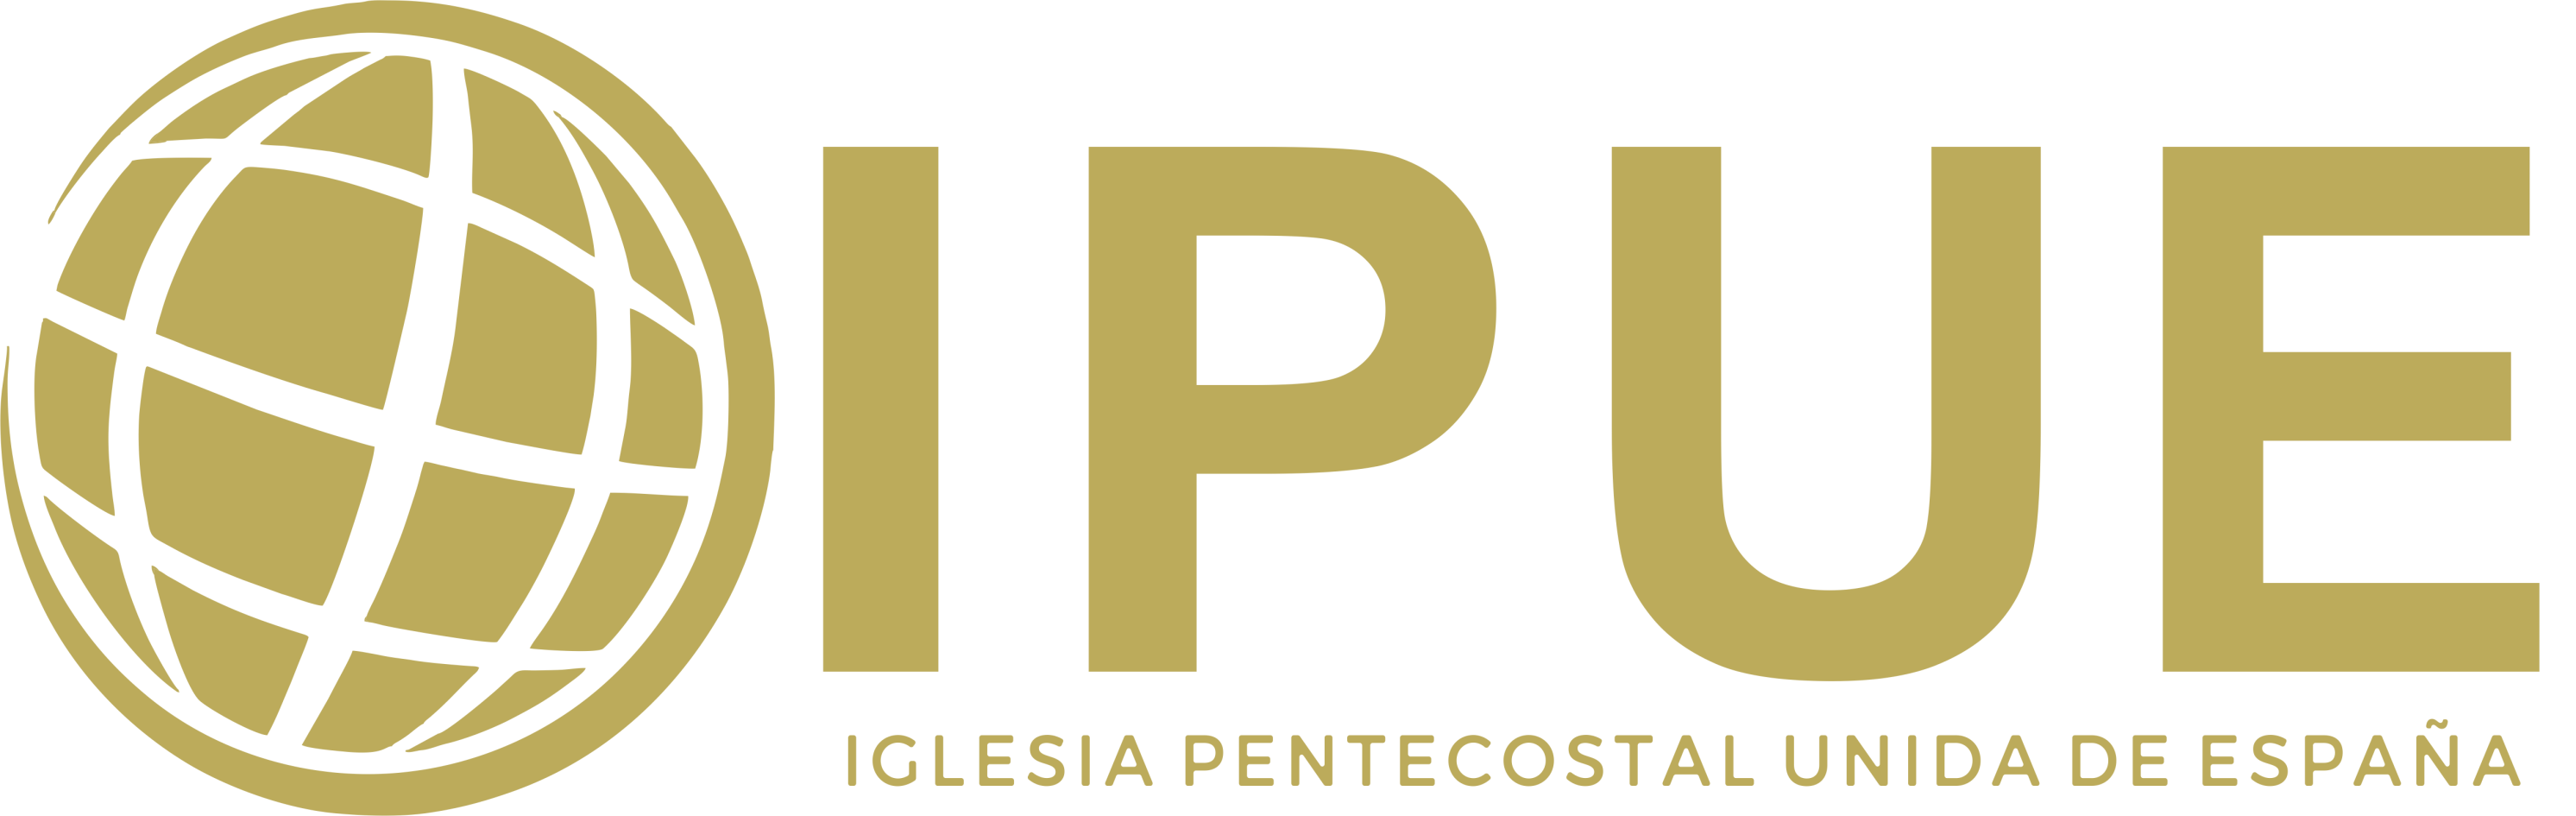 Inicio - ¡Bienvenidos! Iglesia Pentecostal Unida de España